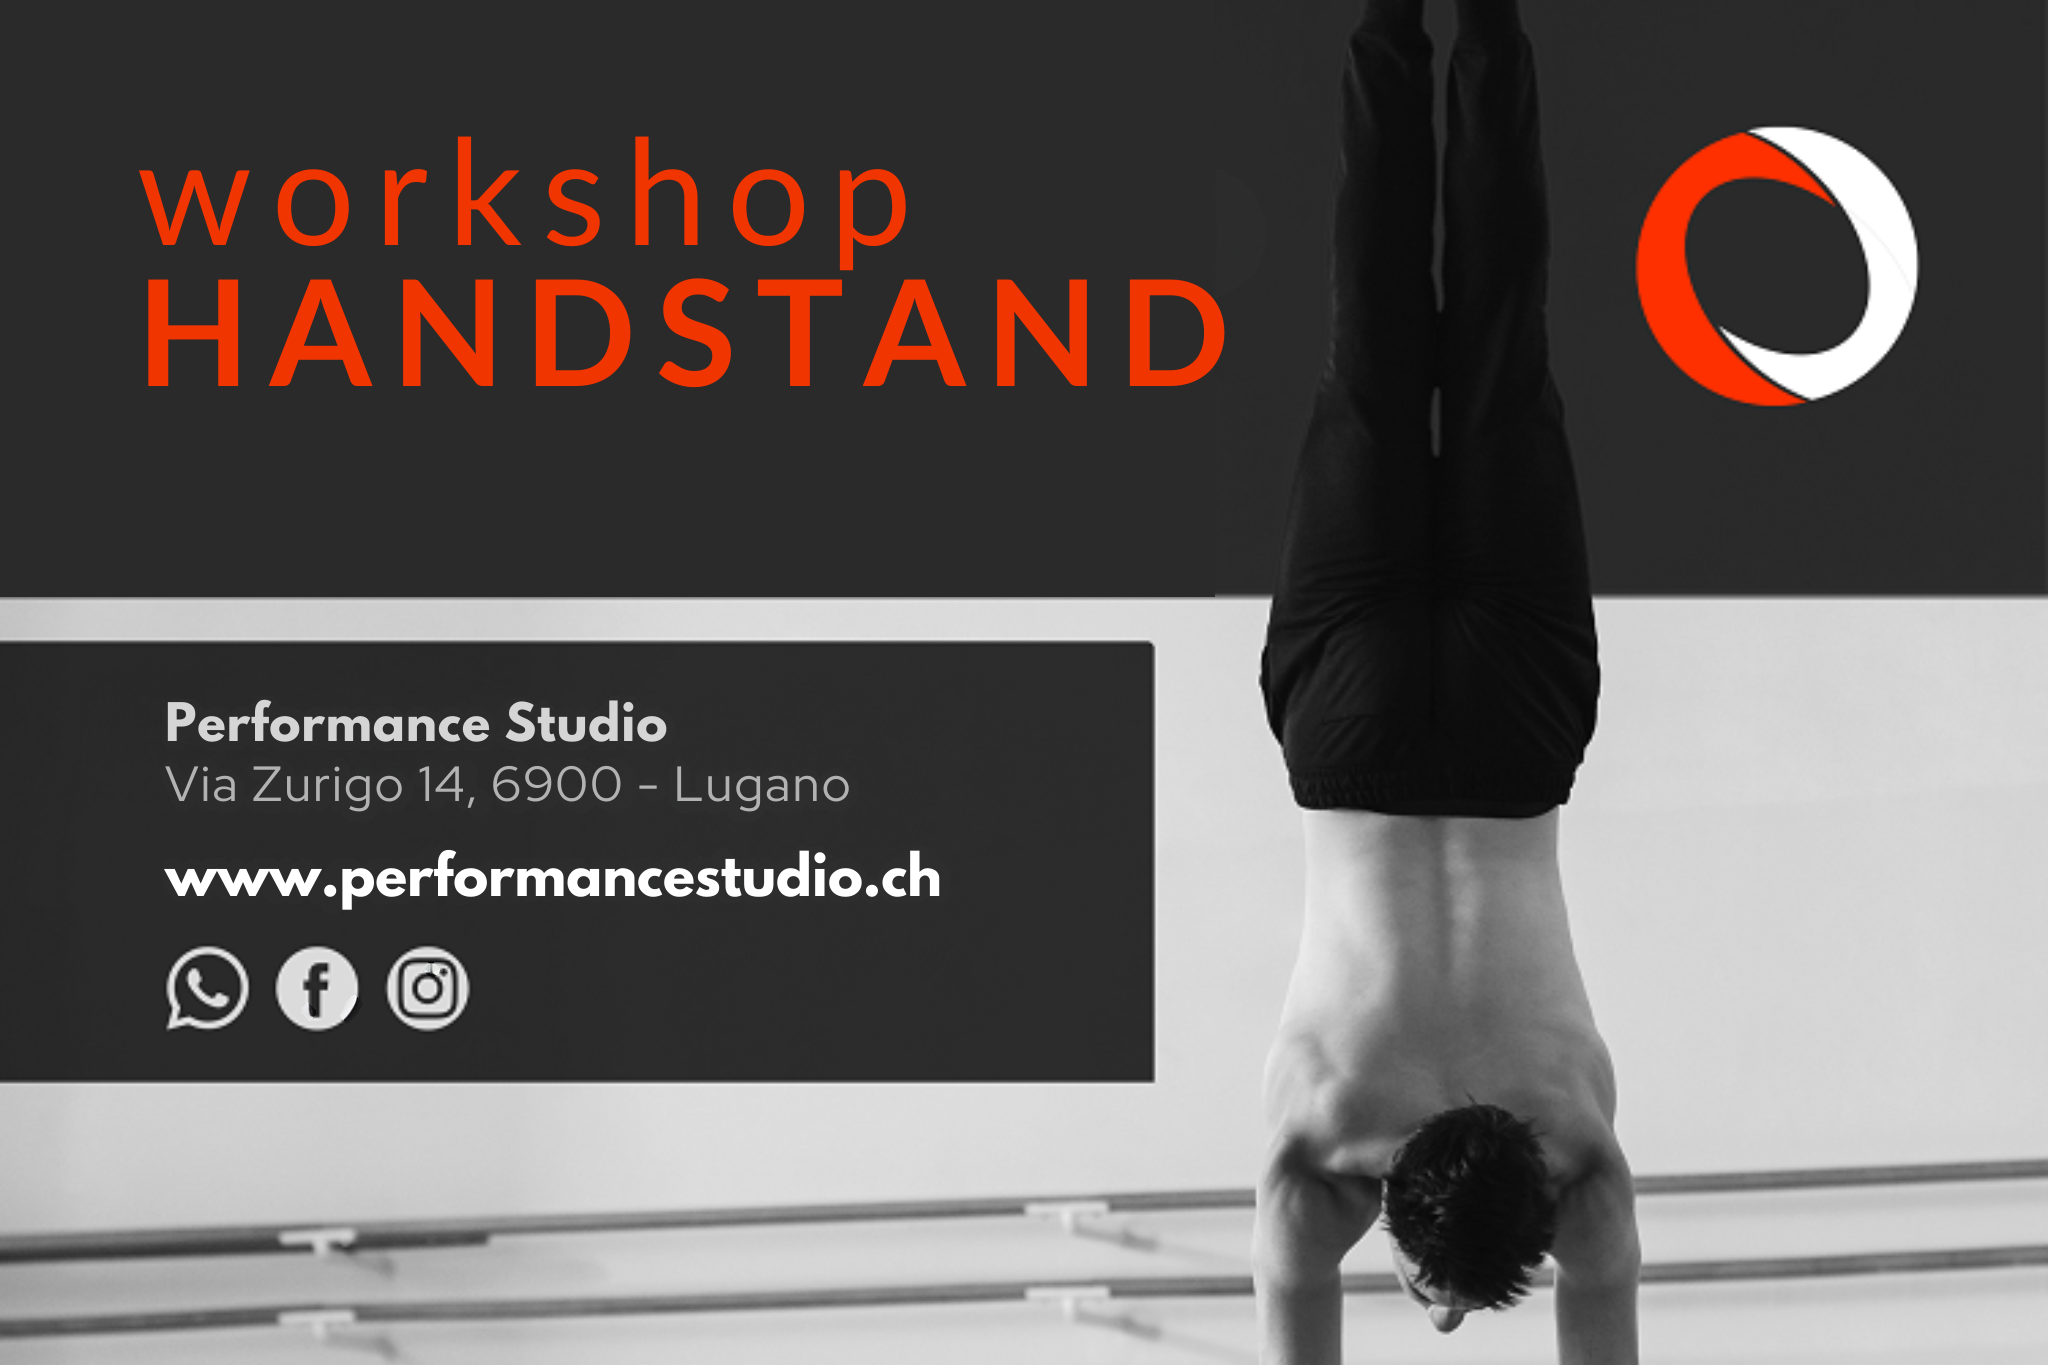 Handstand workshop